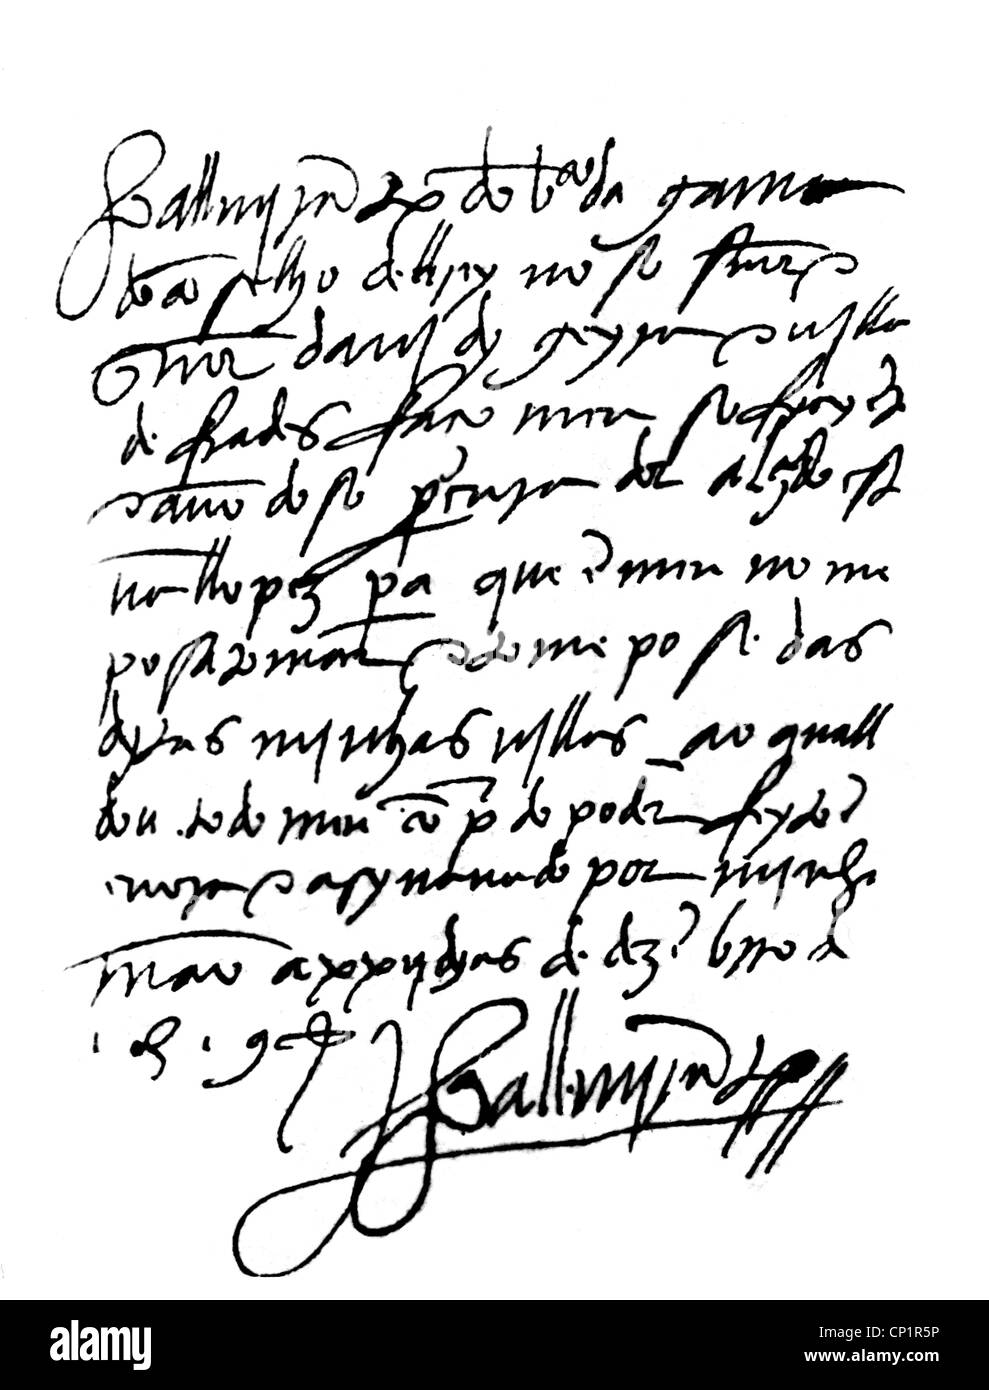 Gama, Vasco da, circa 1469 - 24.12.1524, Portuguese navigator, handwriting, Stock Photo